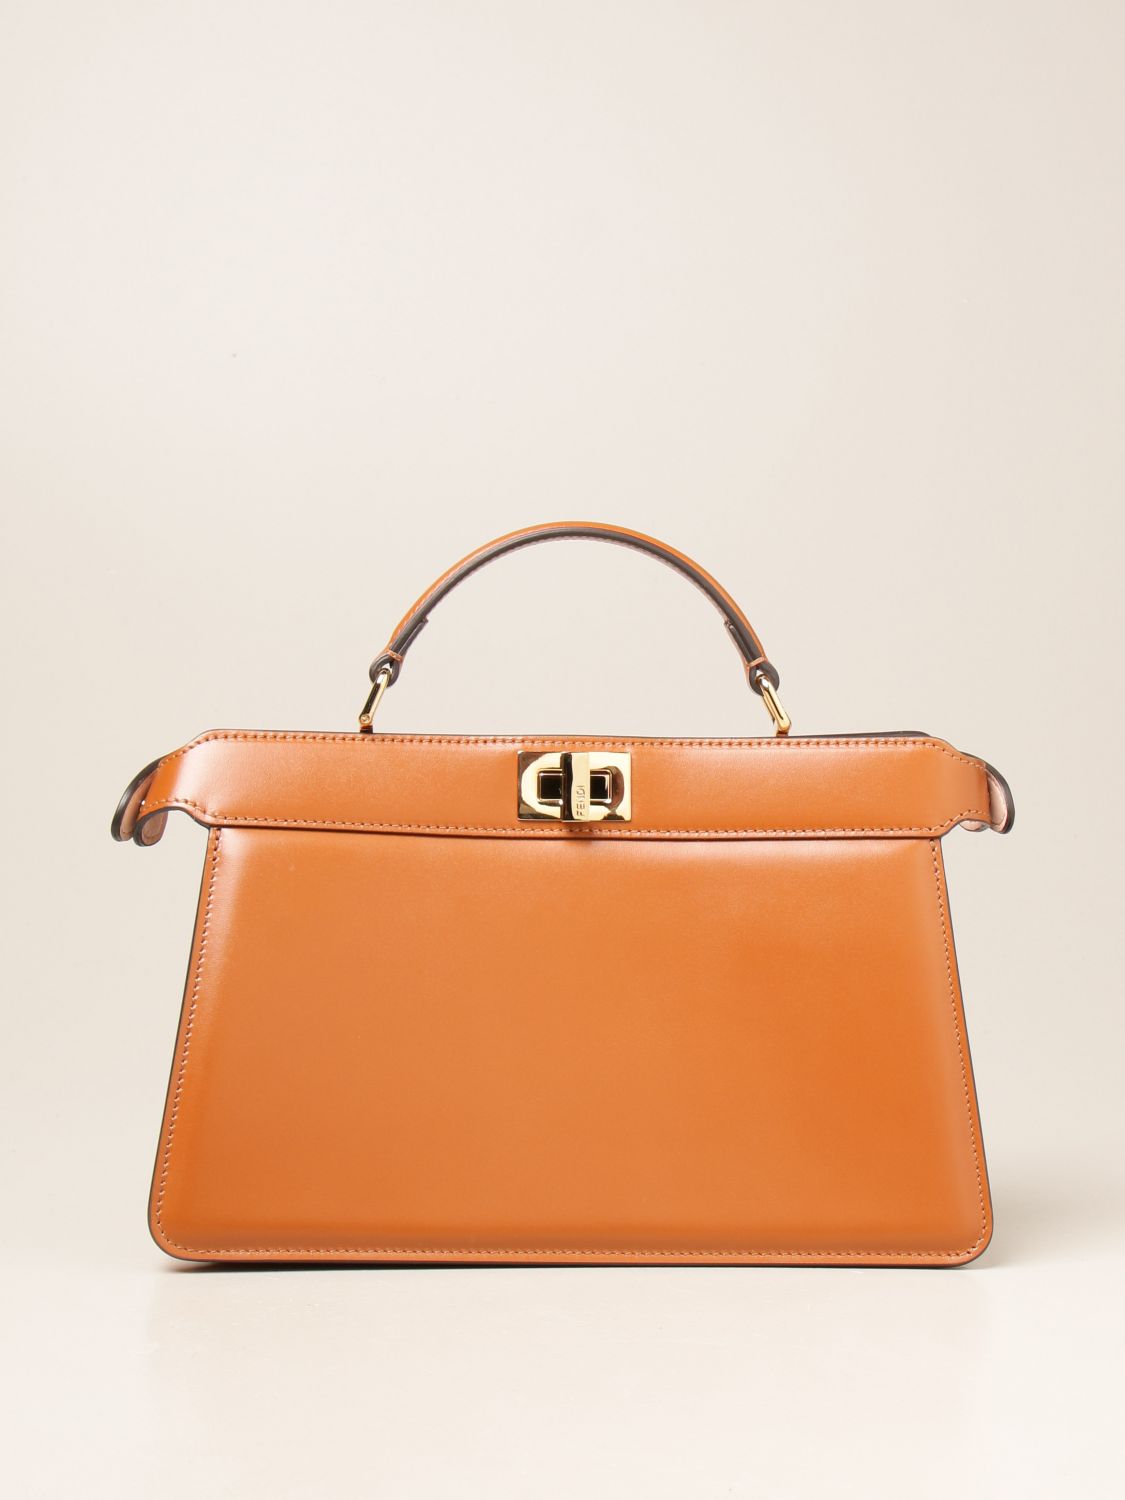 FENDI: Peekaboo ISeeU East-West leather bag - Leather | Fendi handbag ...